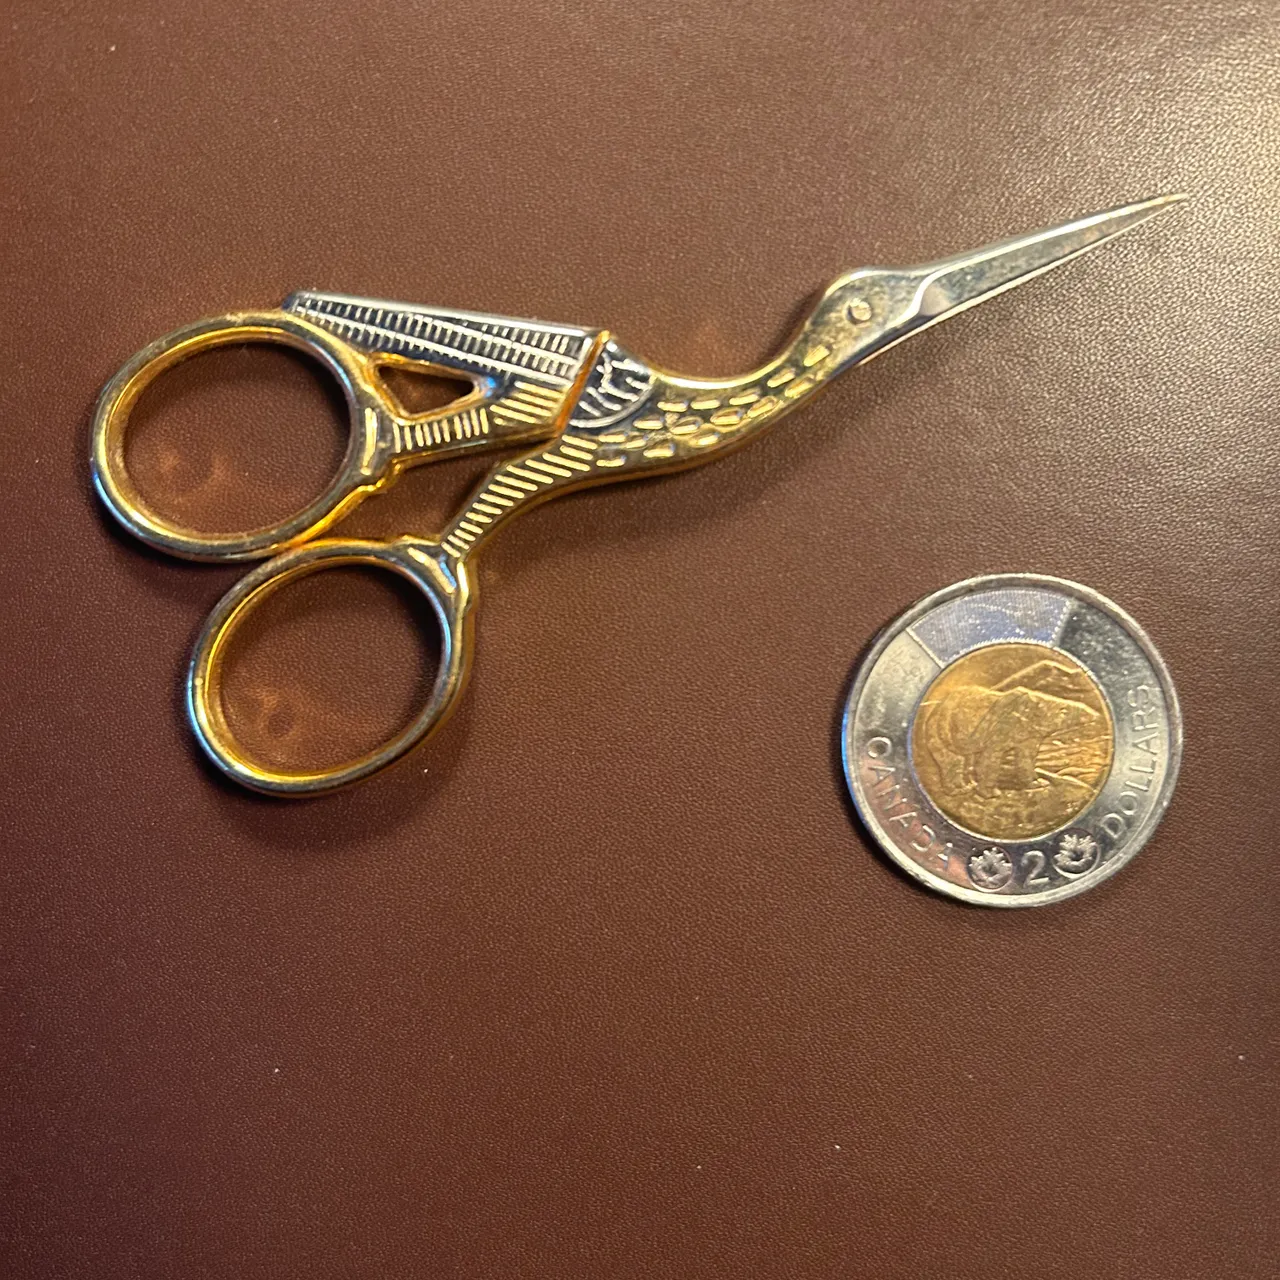 Stork sewing scissors - 3.5 inch photo 3